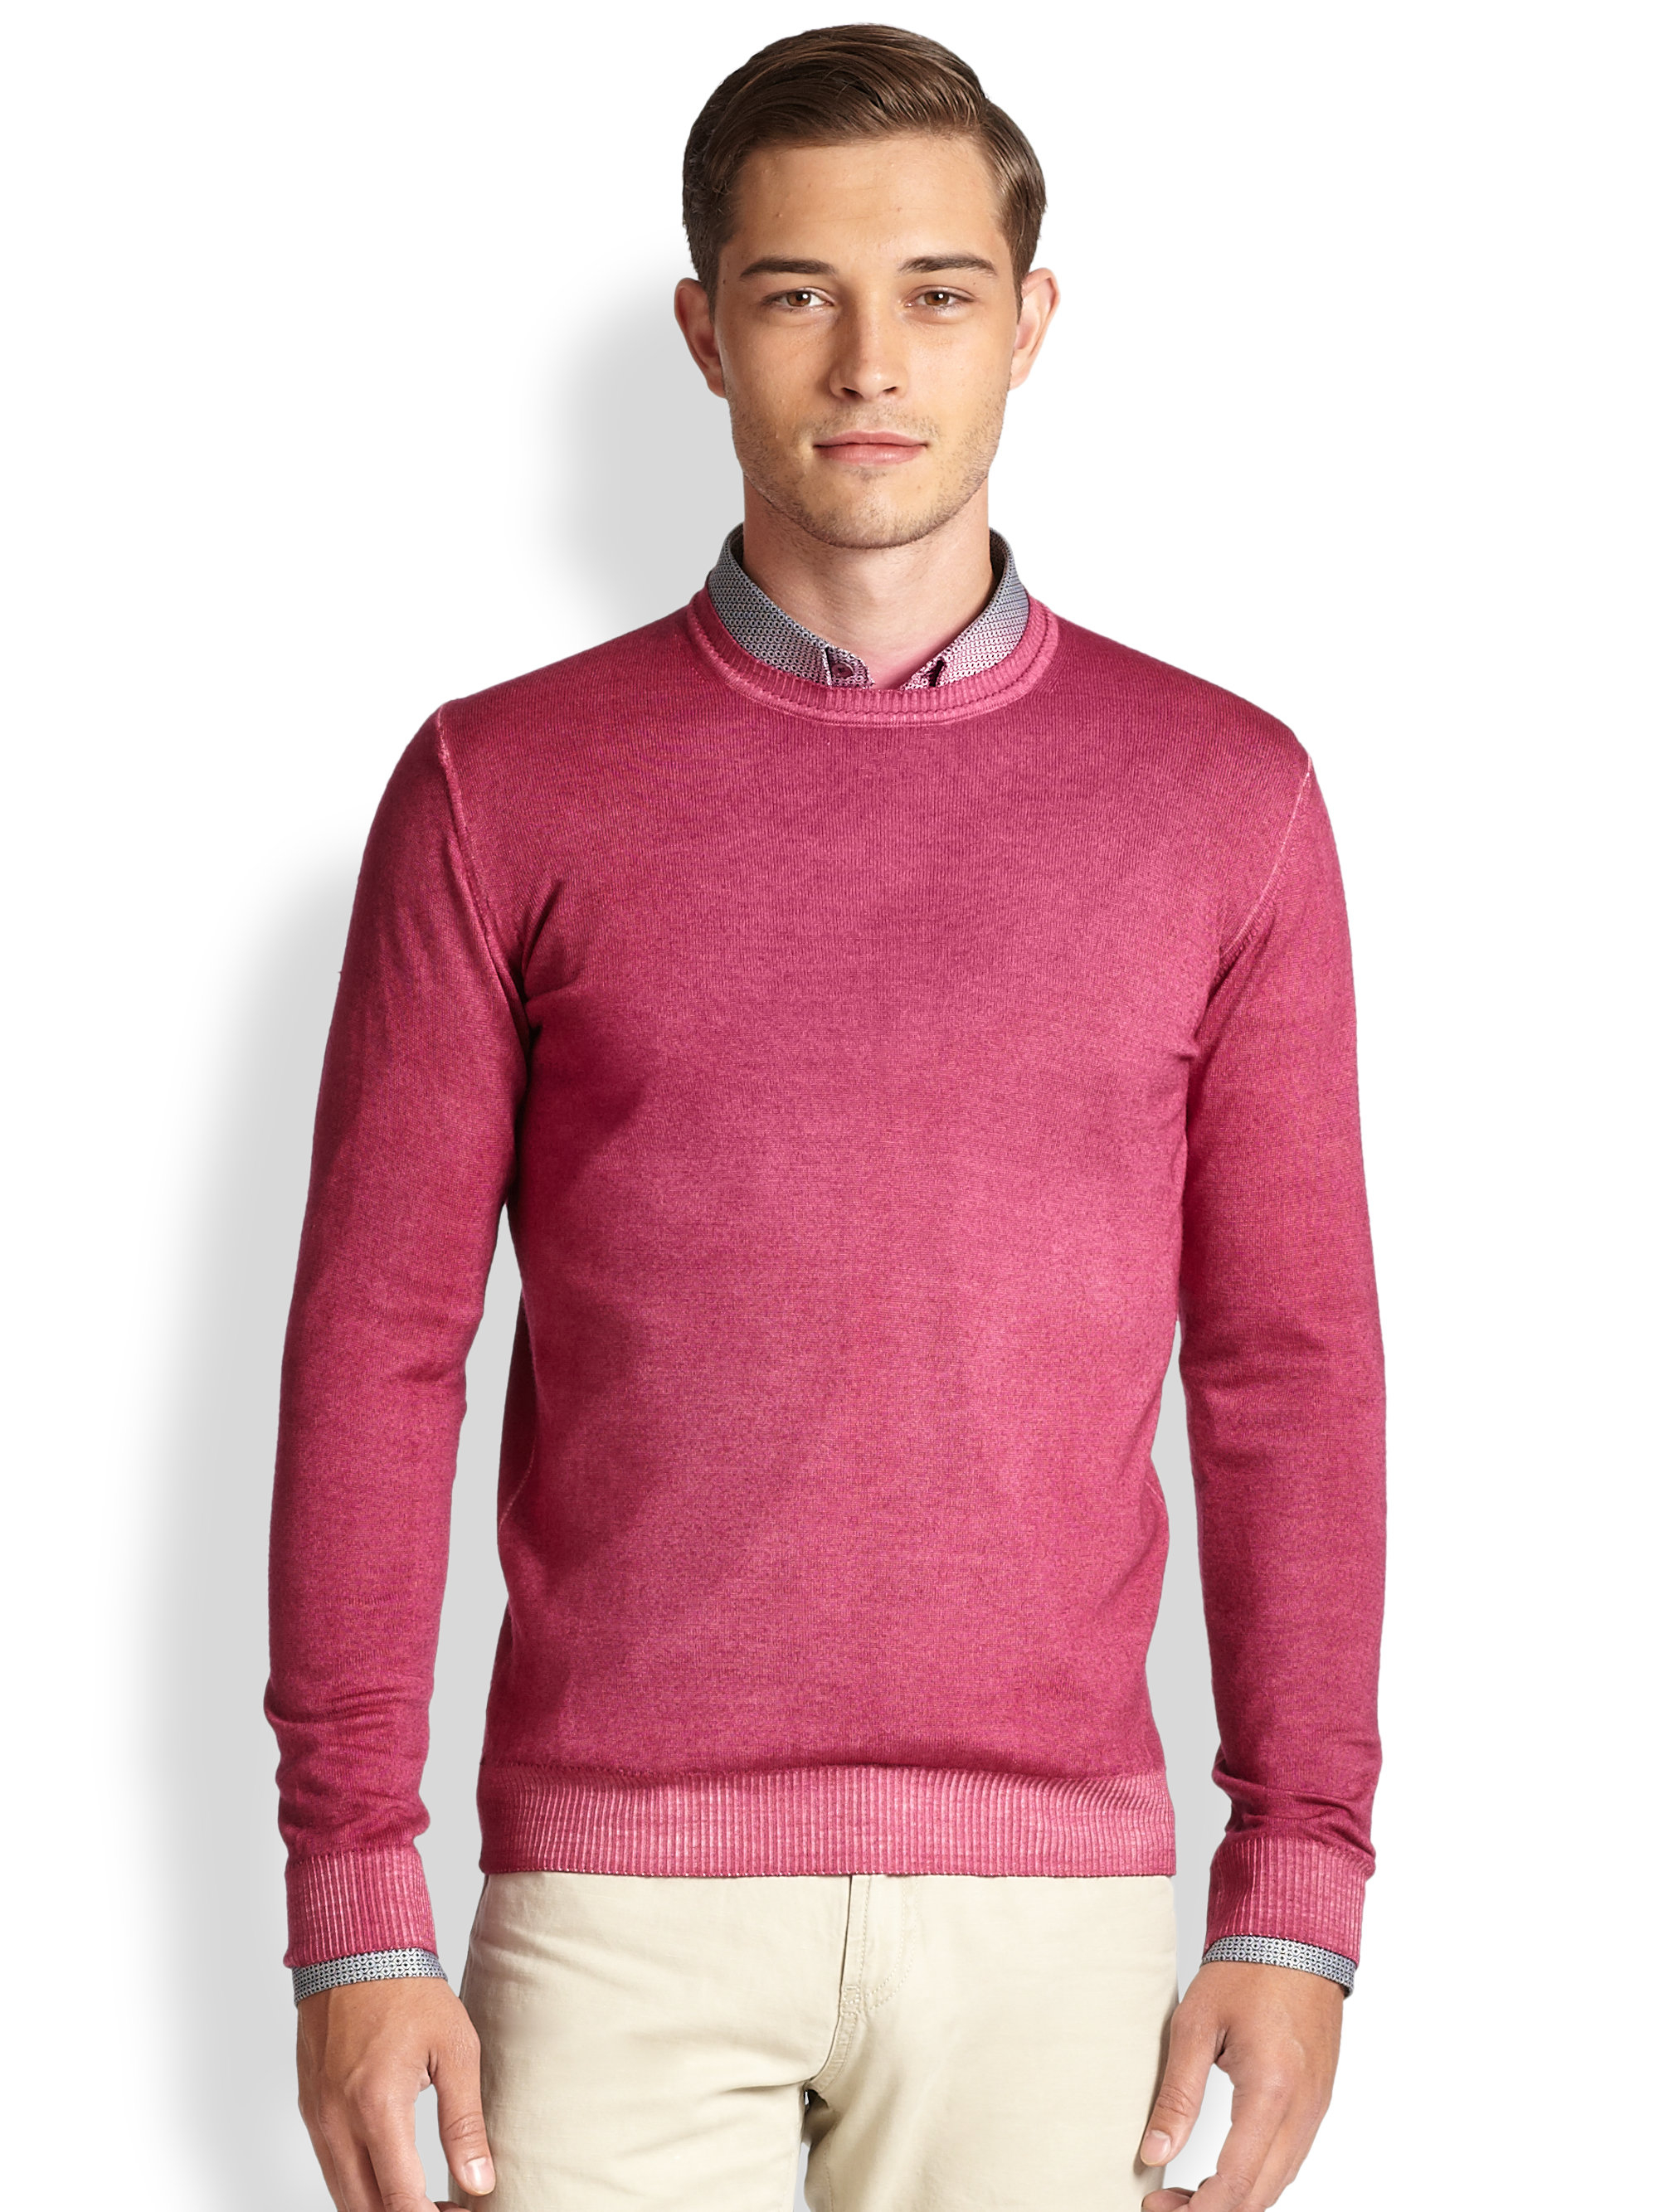 Lyst - Sand Merino Wool Crewneck Sweater in Pink for Men